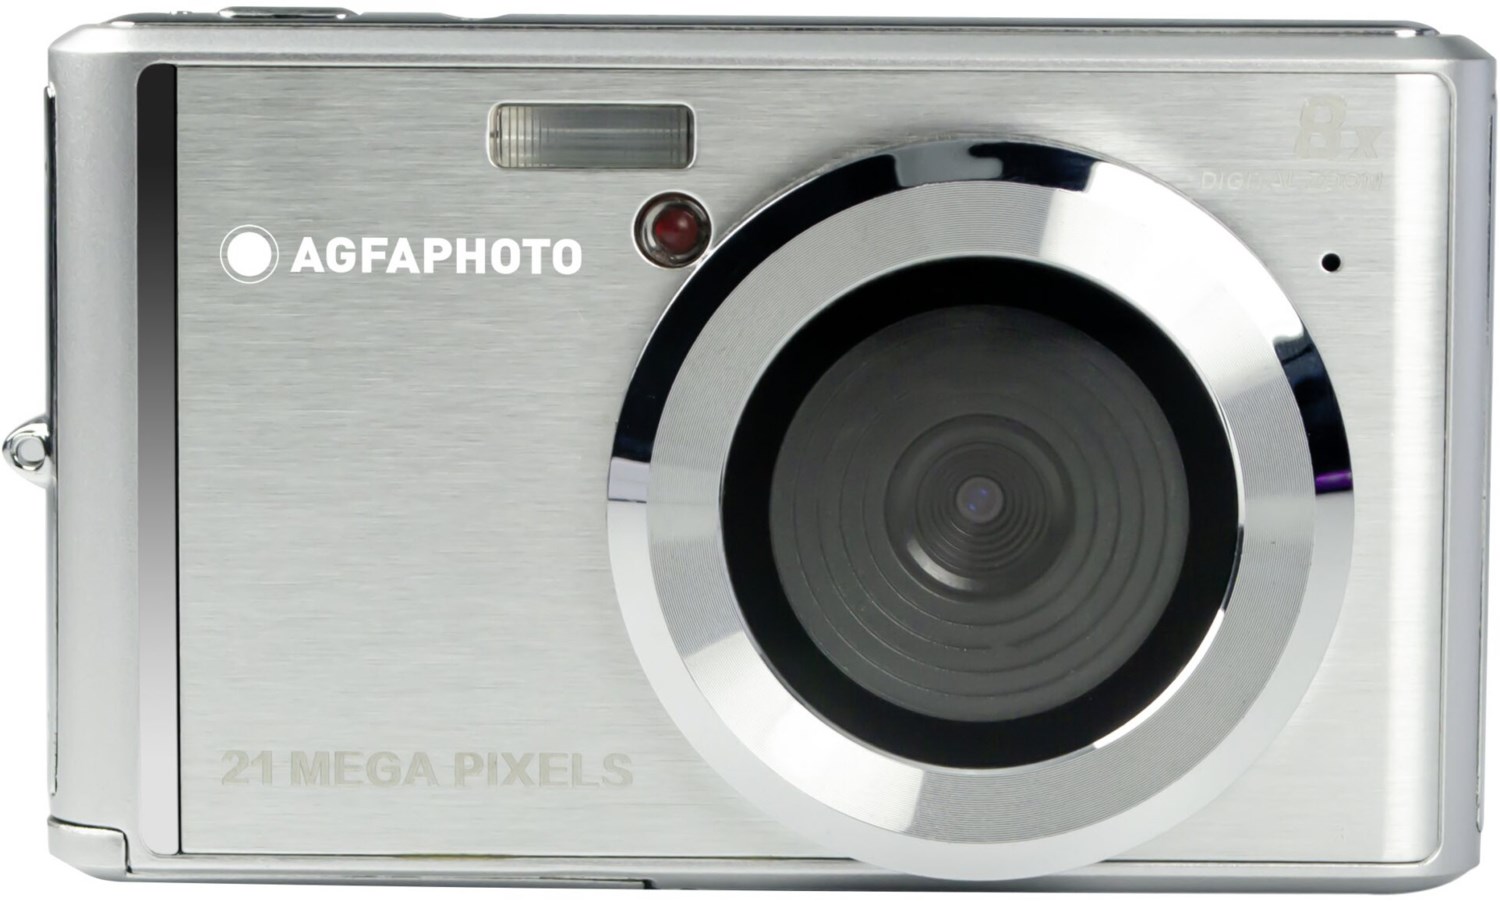 Realishot DC5200 Digitale Kompaktkamera silber von Agfaphoto